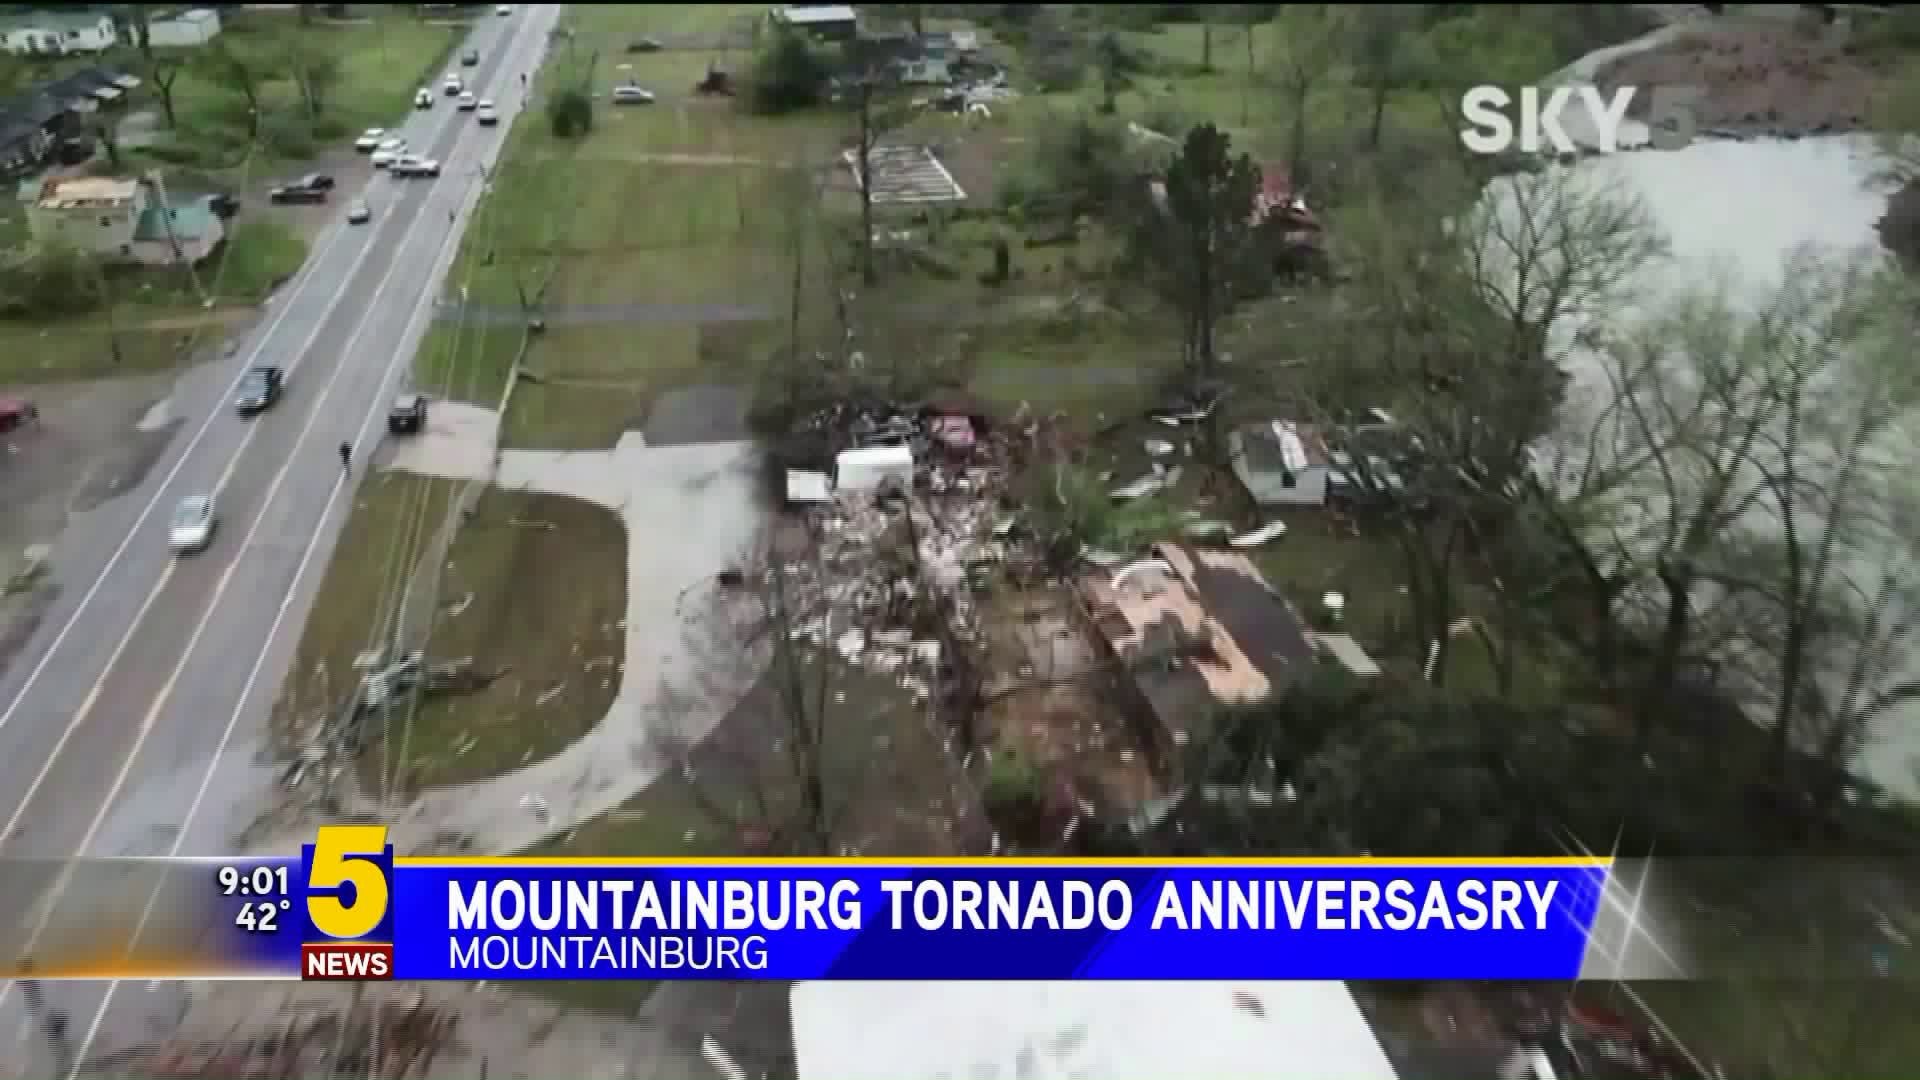 Mountainburg Tornado Anniversary